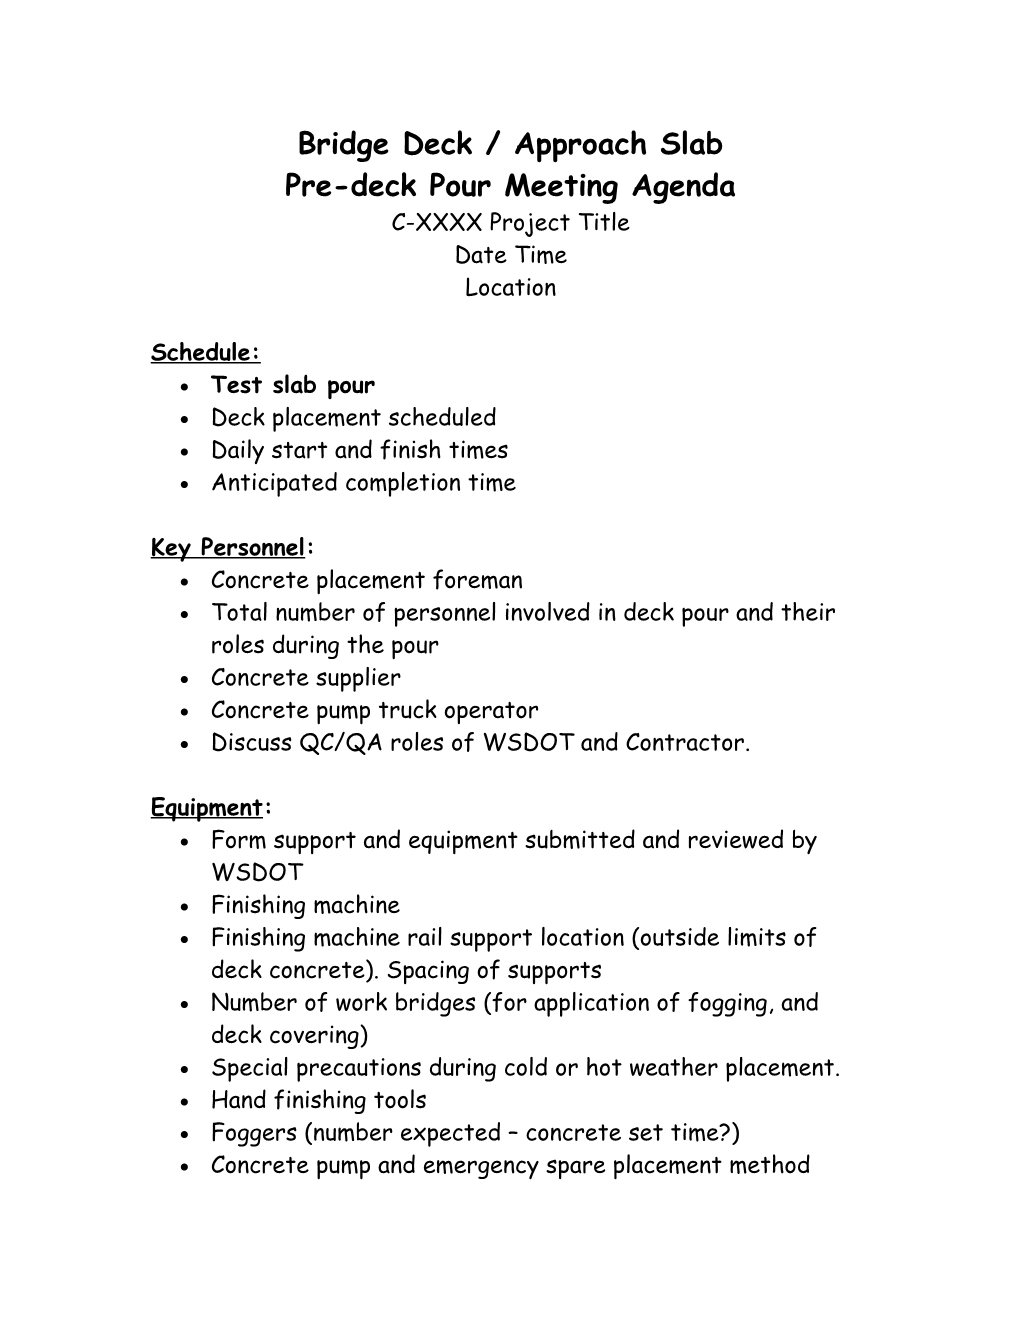 Sample Pre-Deck Pour Meeting Agenda